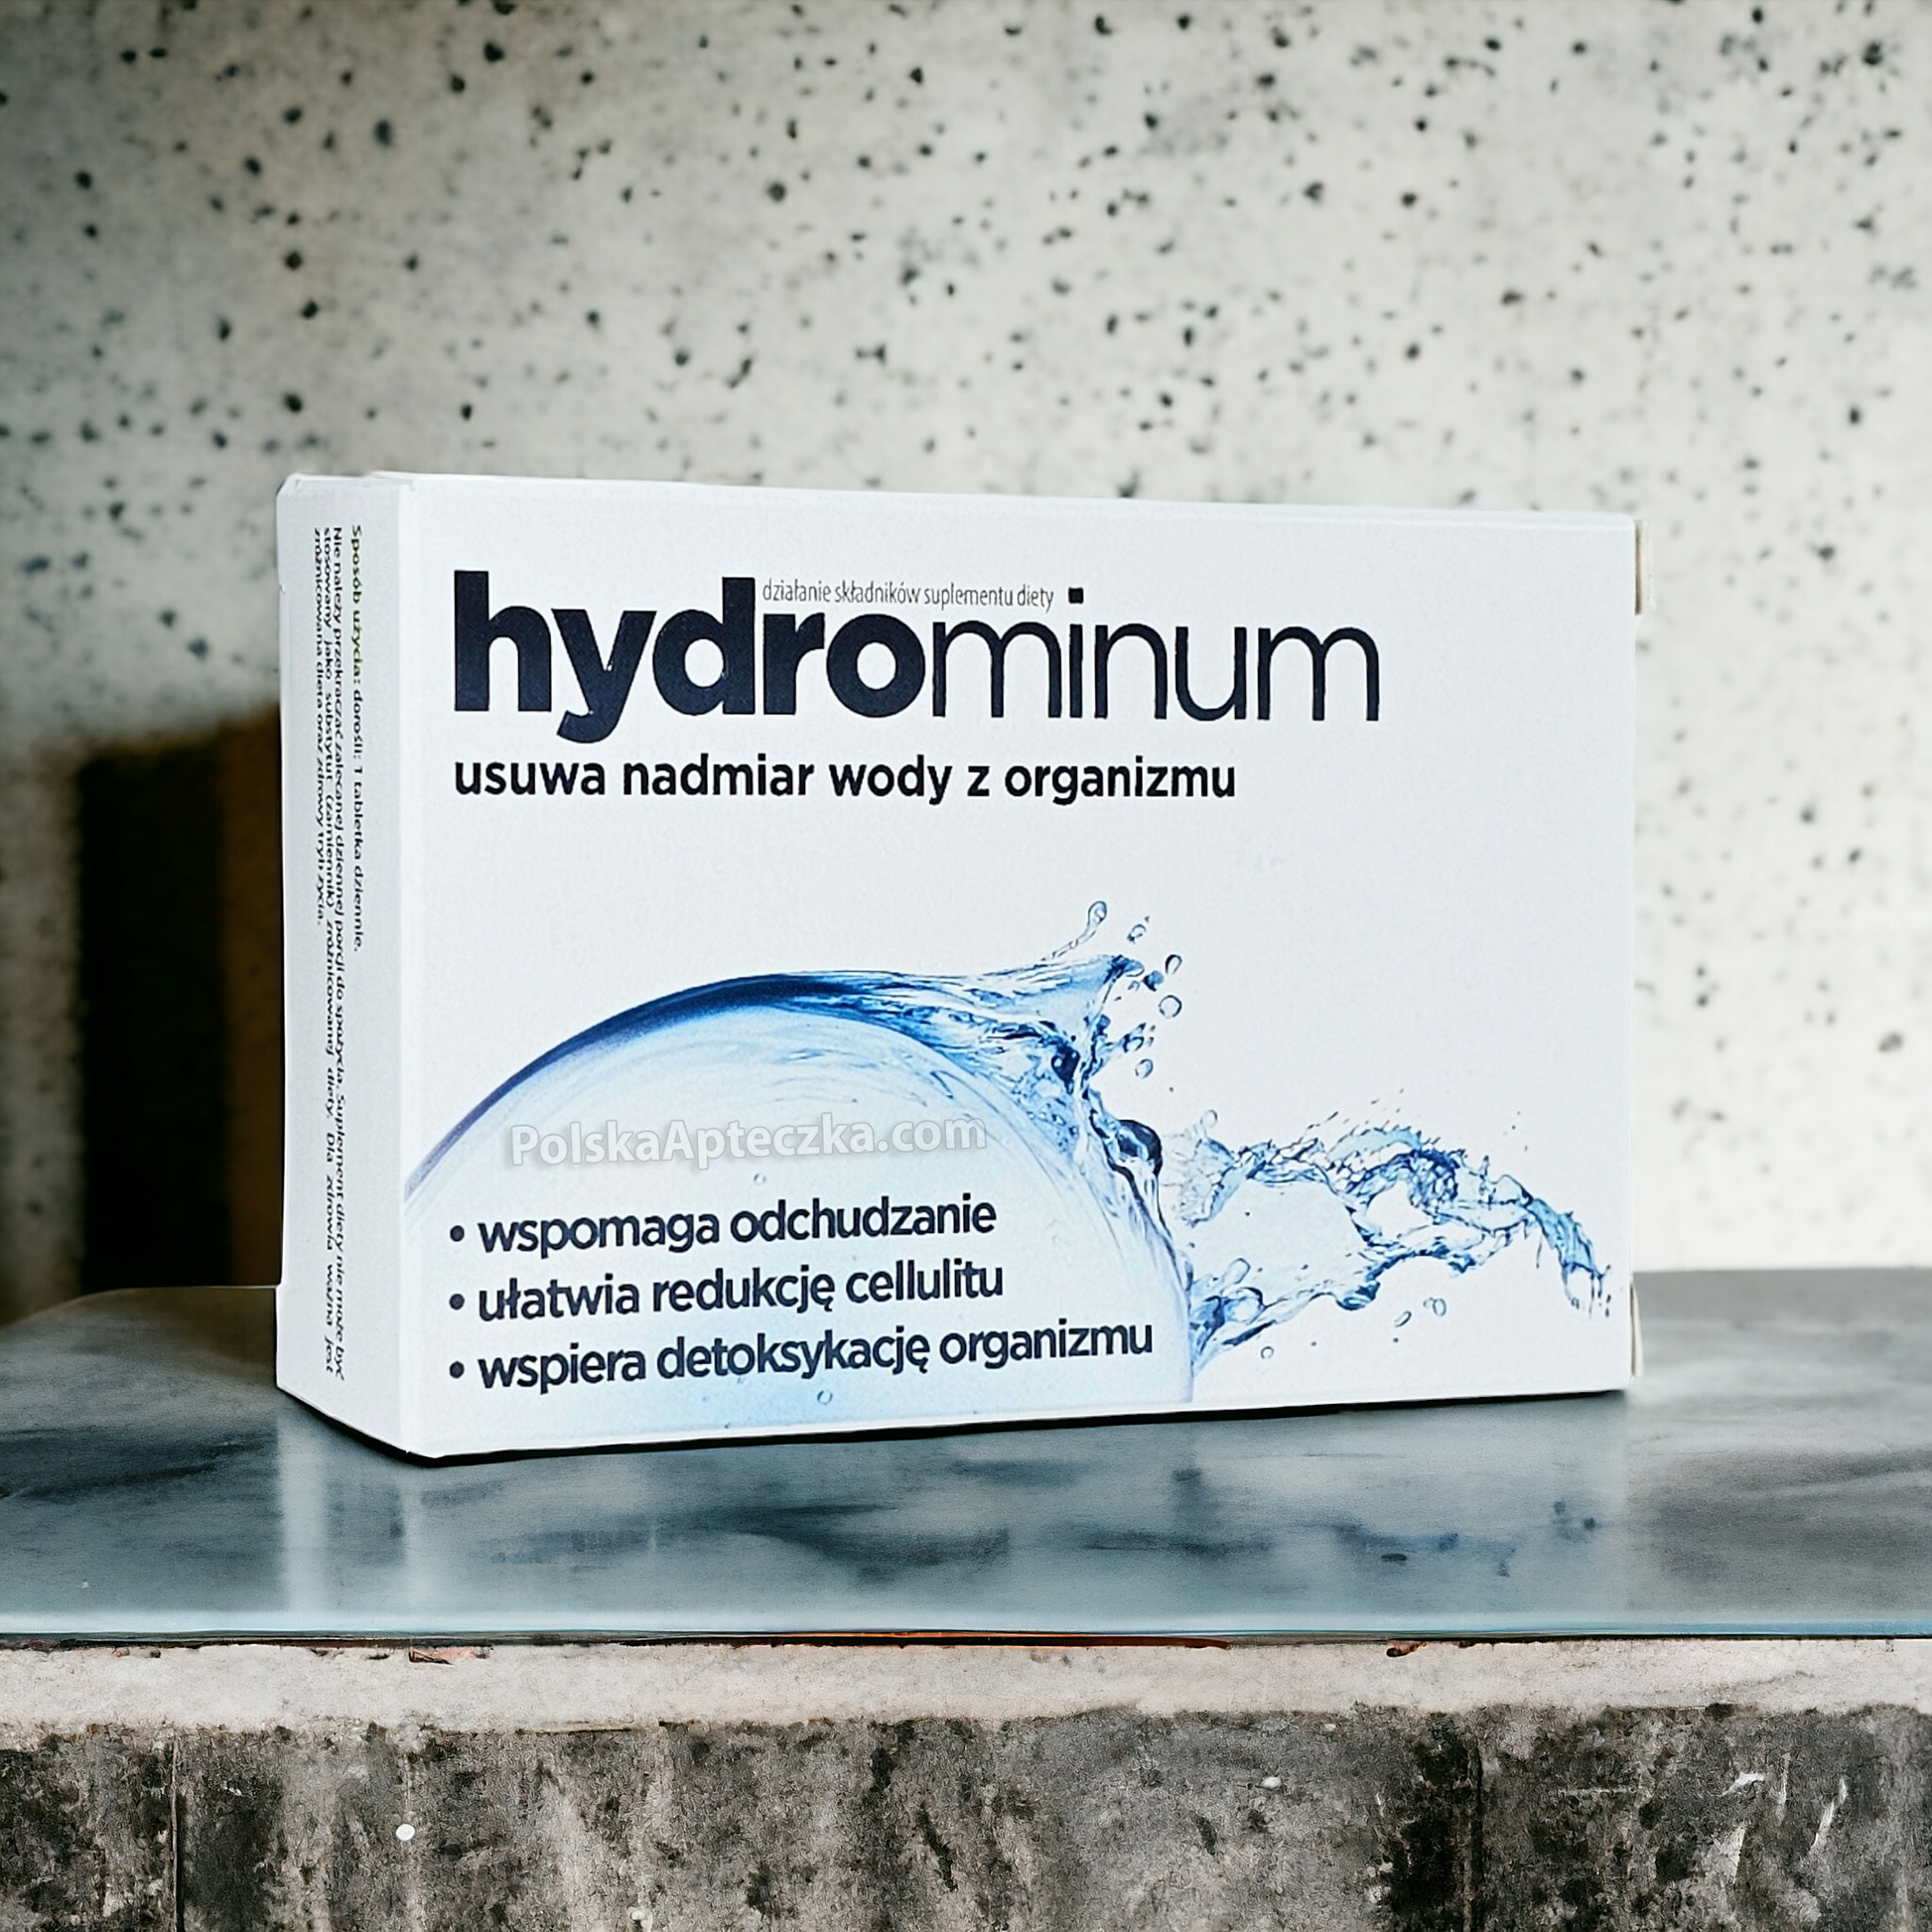 Hydrominum tablet